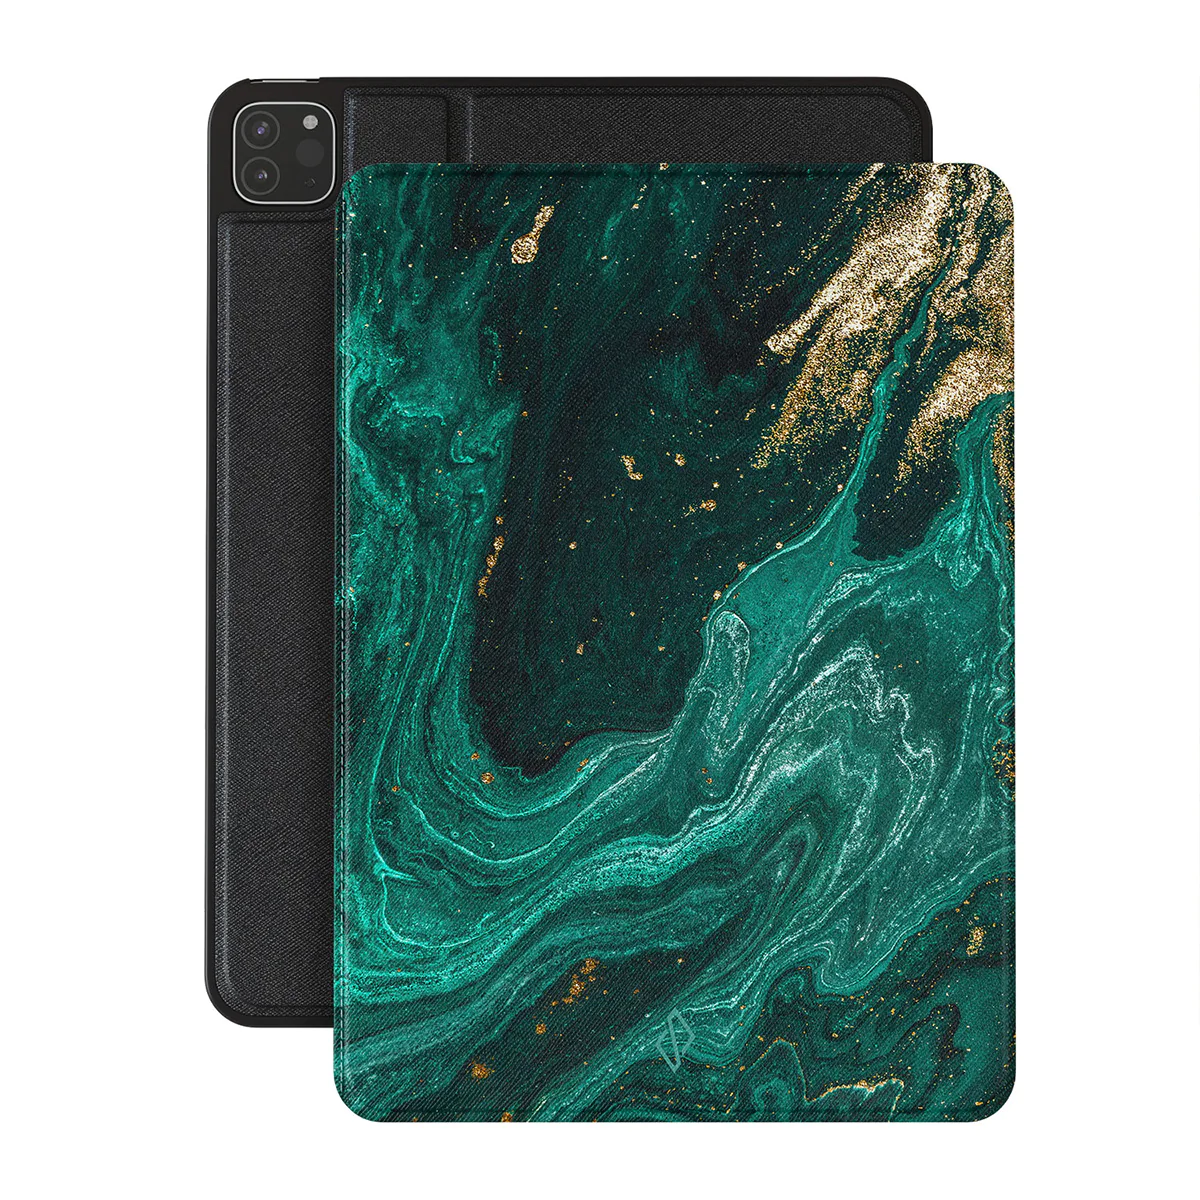 BURGA Emerald Pool Case for iPad